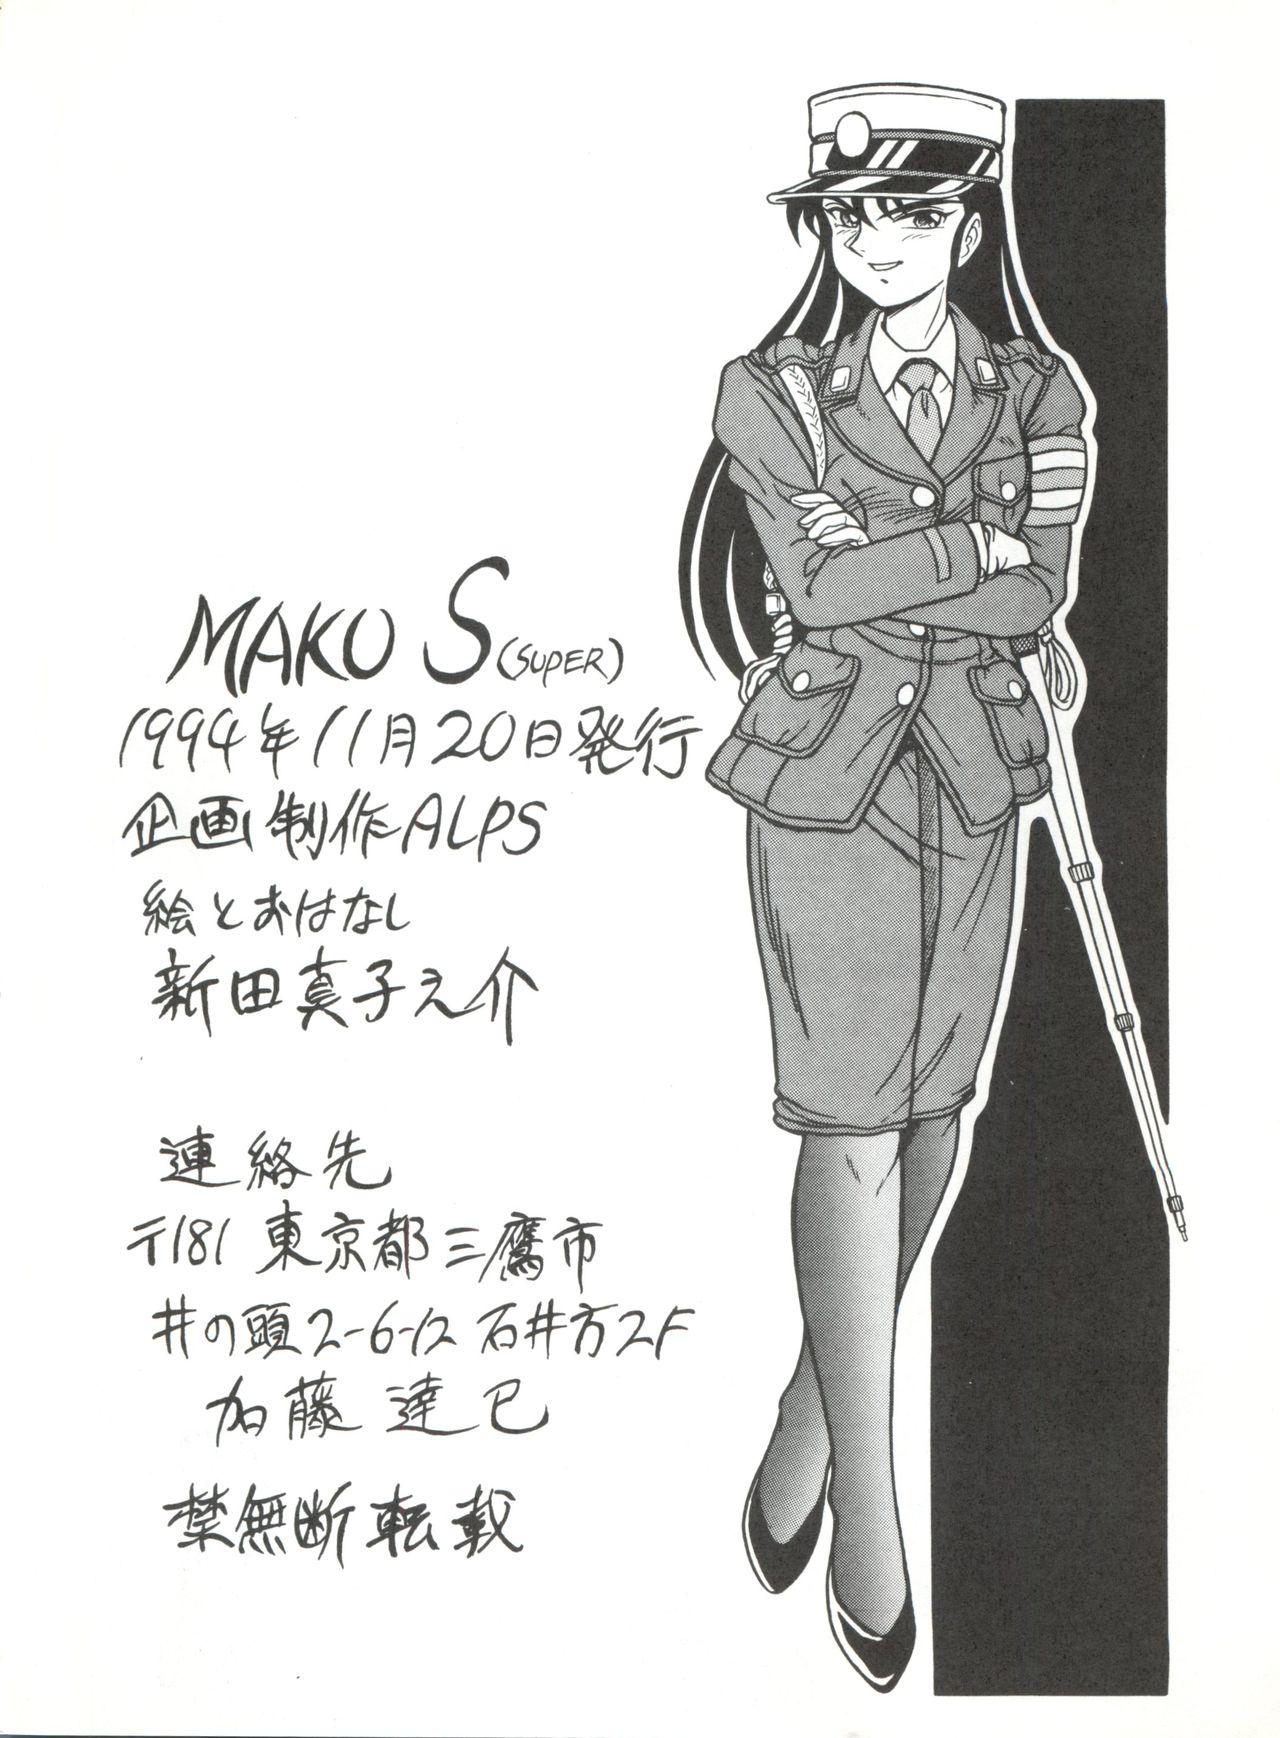 Tattoos Mako S - Sailor moon Street fighter Big - Page 113